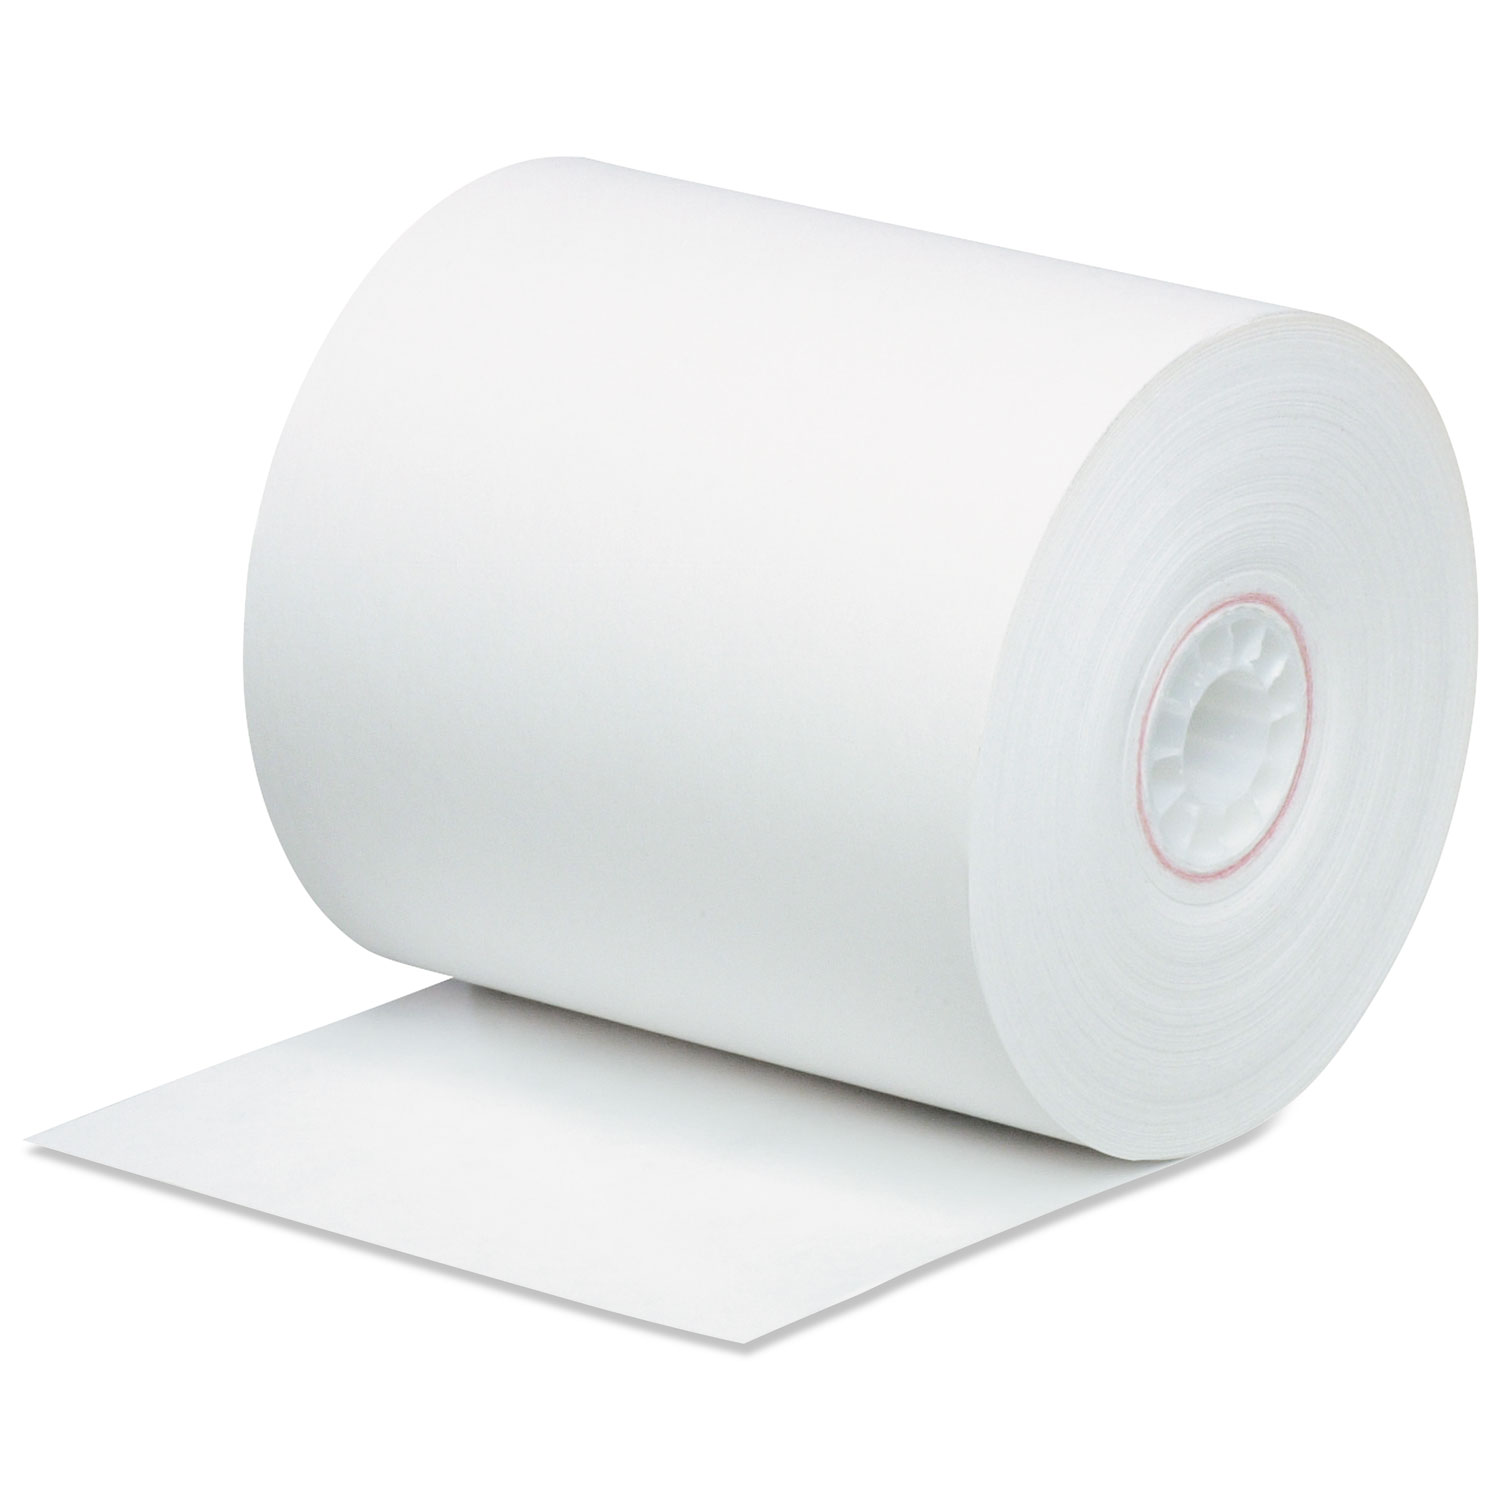  Iconex PMC07788 Impact Bond Paper Rolls, 0.45 Core, 3 x 165 ft, White, 50/Carton (ICX90742239) 